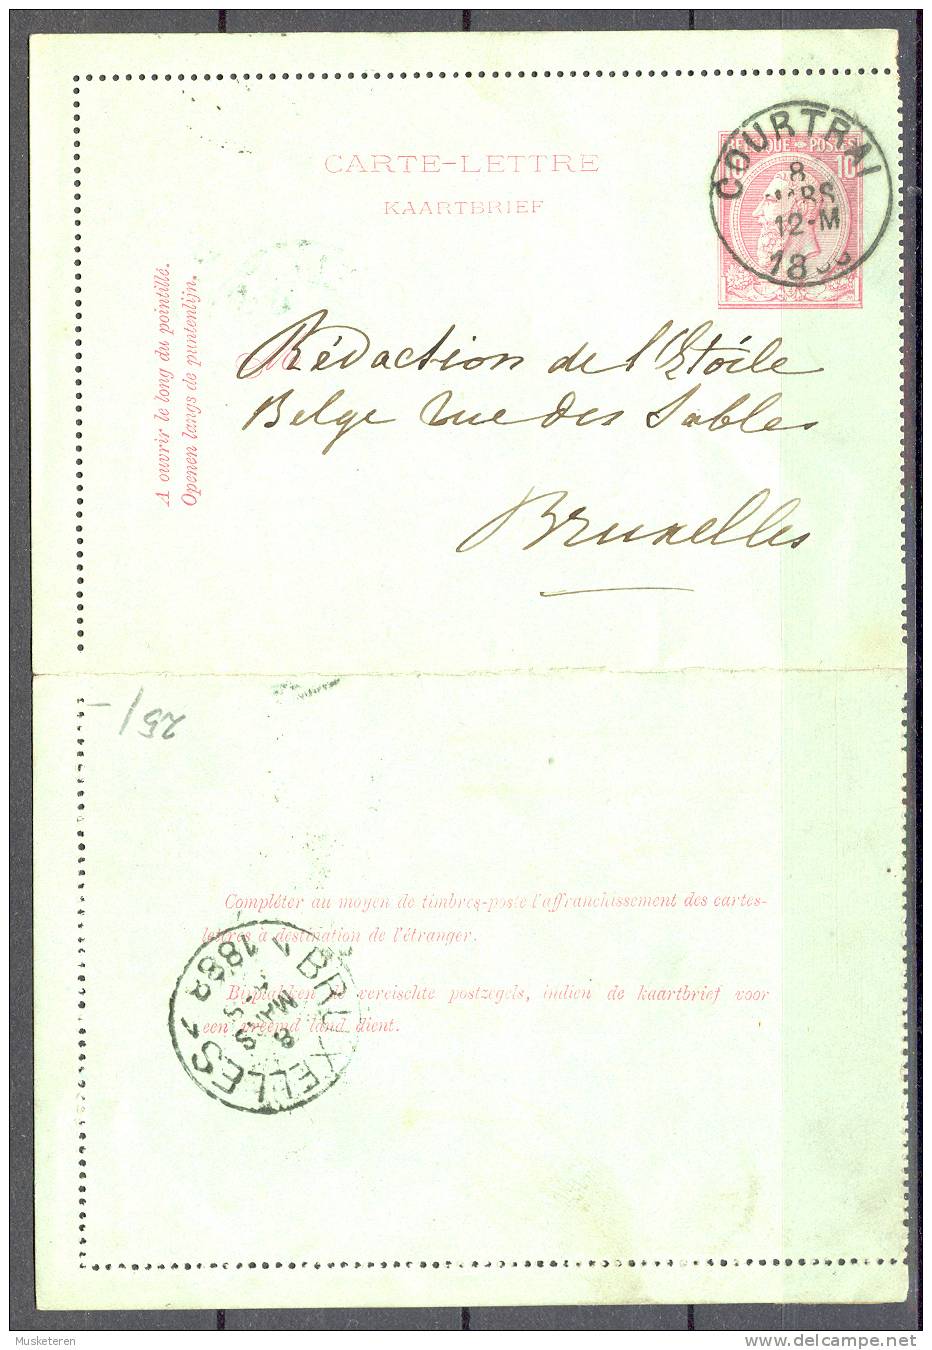 Belgium Postal Stationery Ganzsache Carte-Lettre Letter Card Deluxe COUTRAI Cancel 1888 To Bruxelles - Cartas-Letras